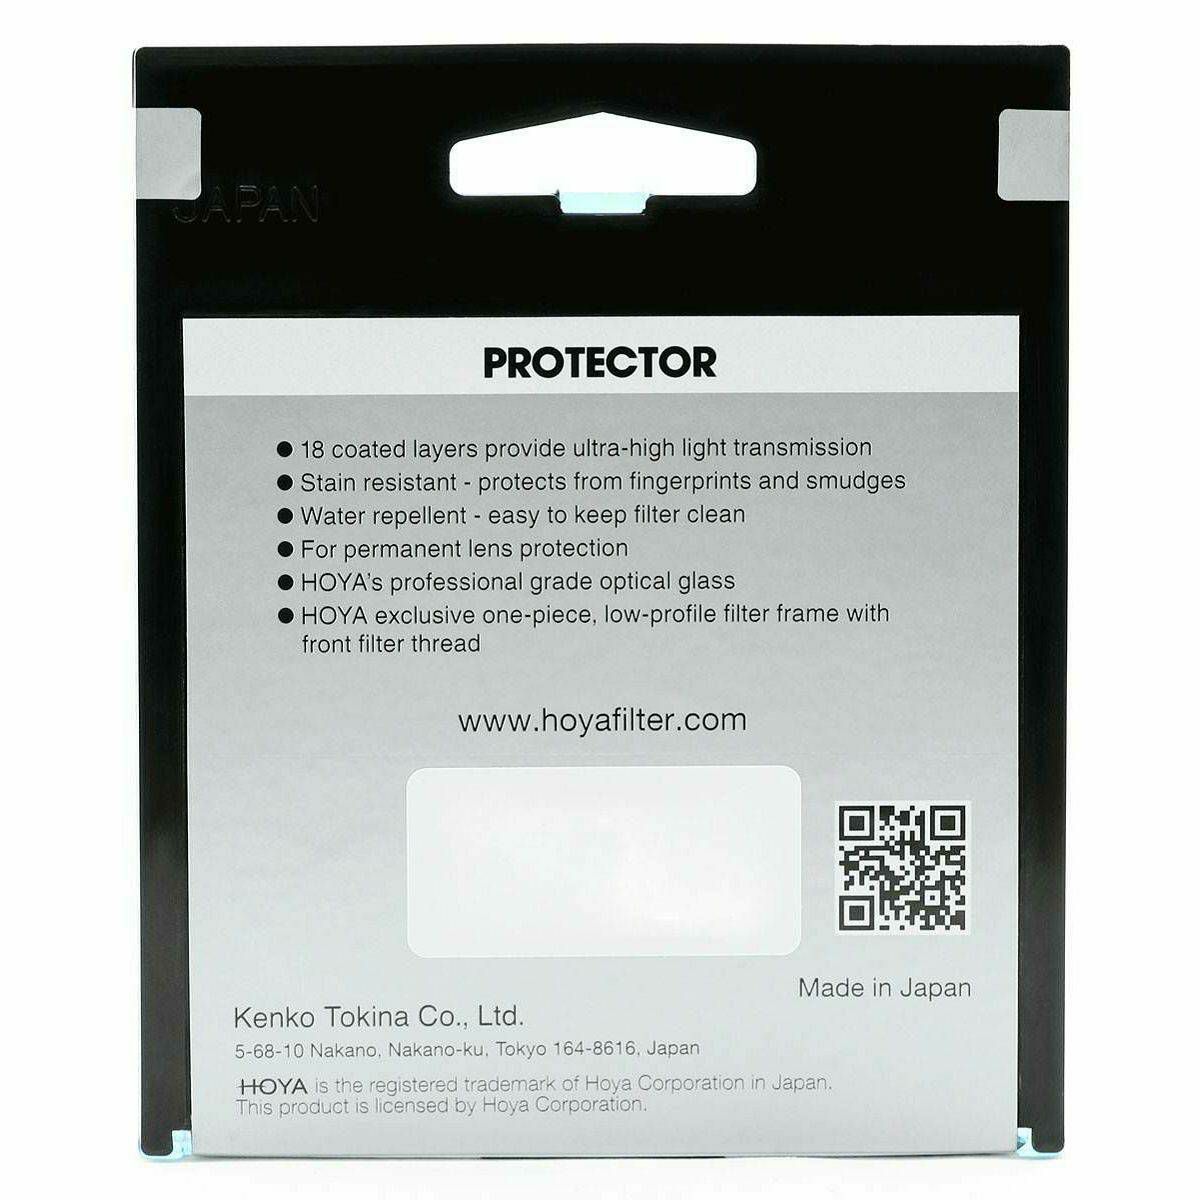 Hoya Fusion One Protector 40.5mm zaštitni filter